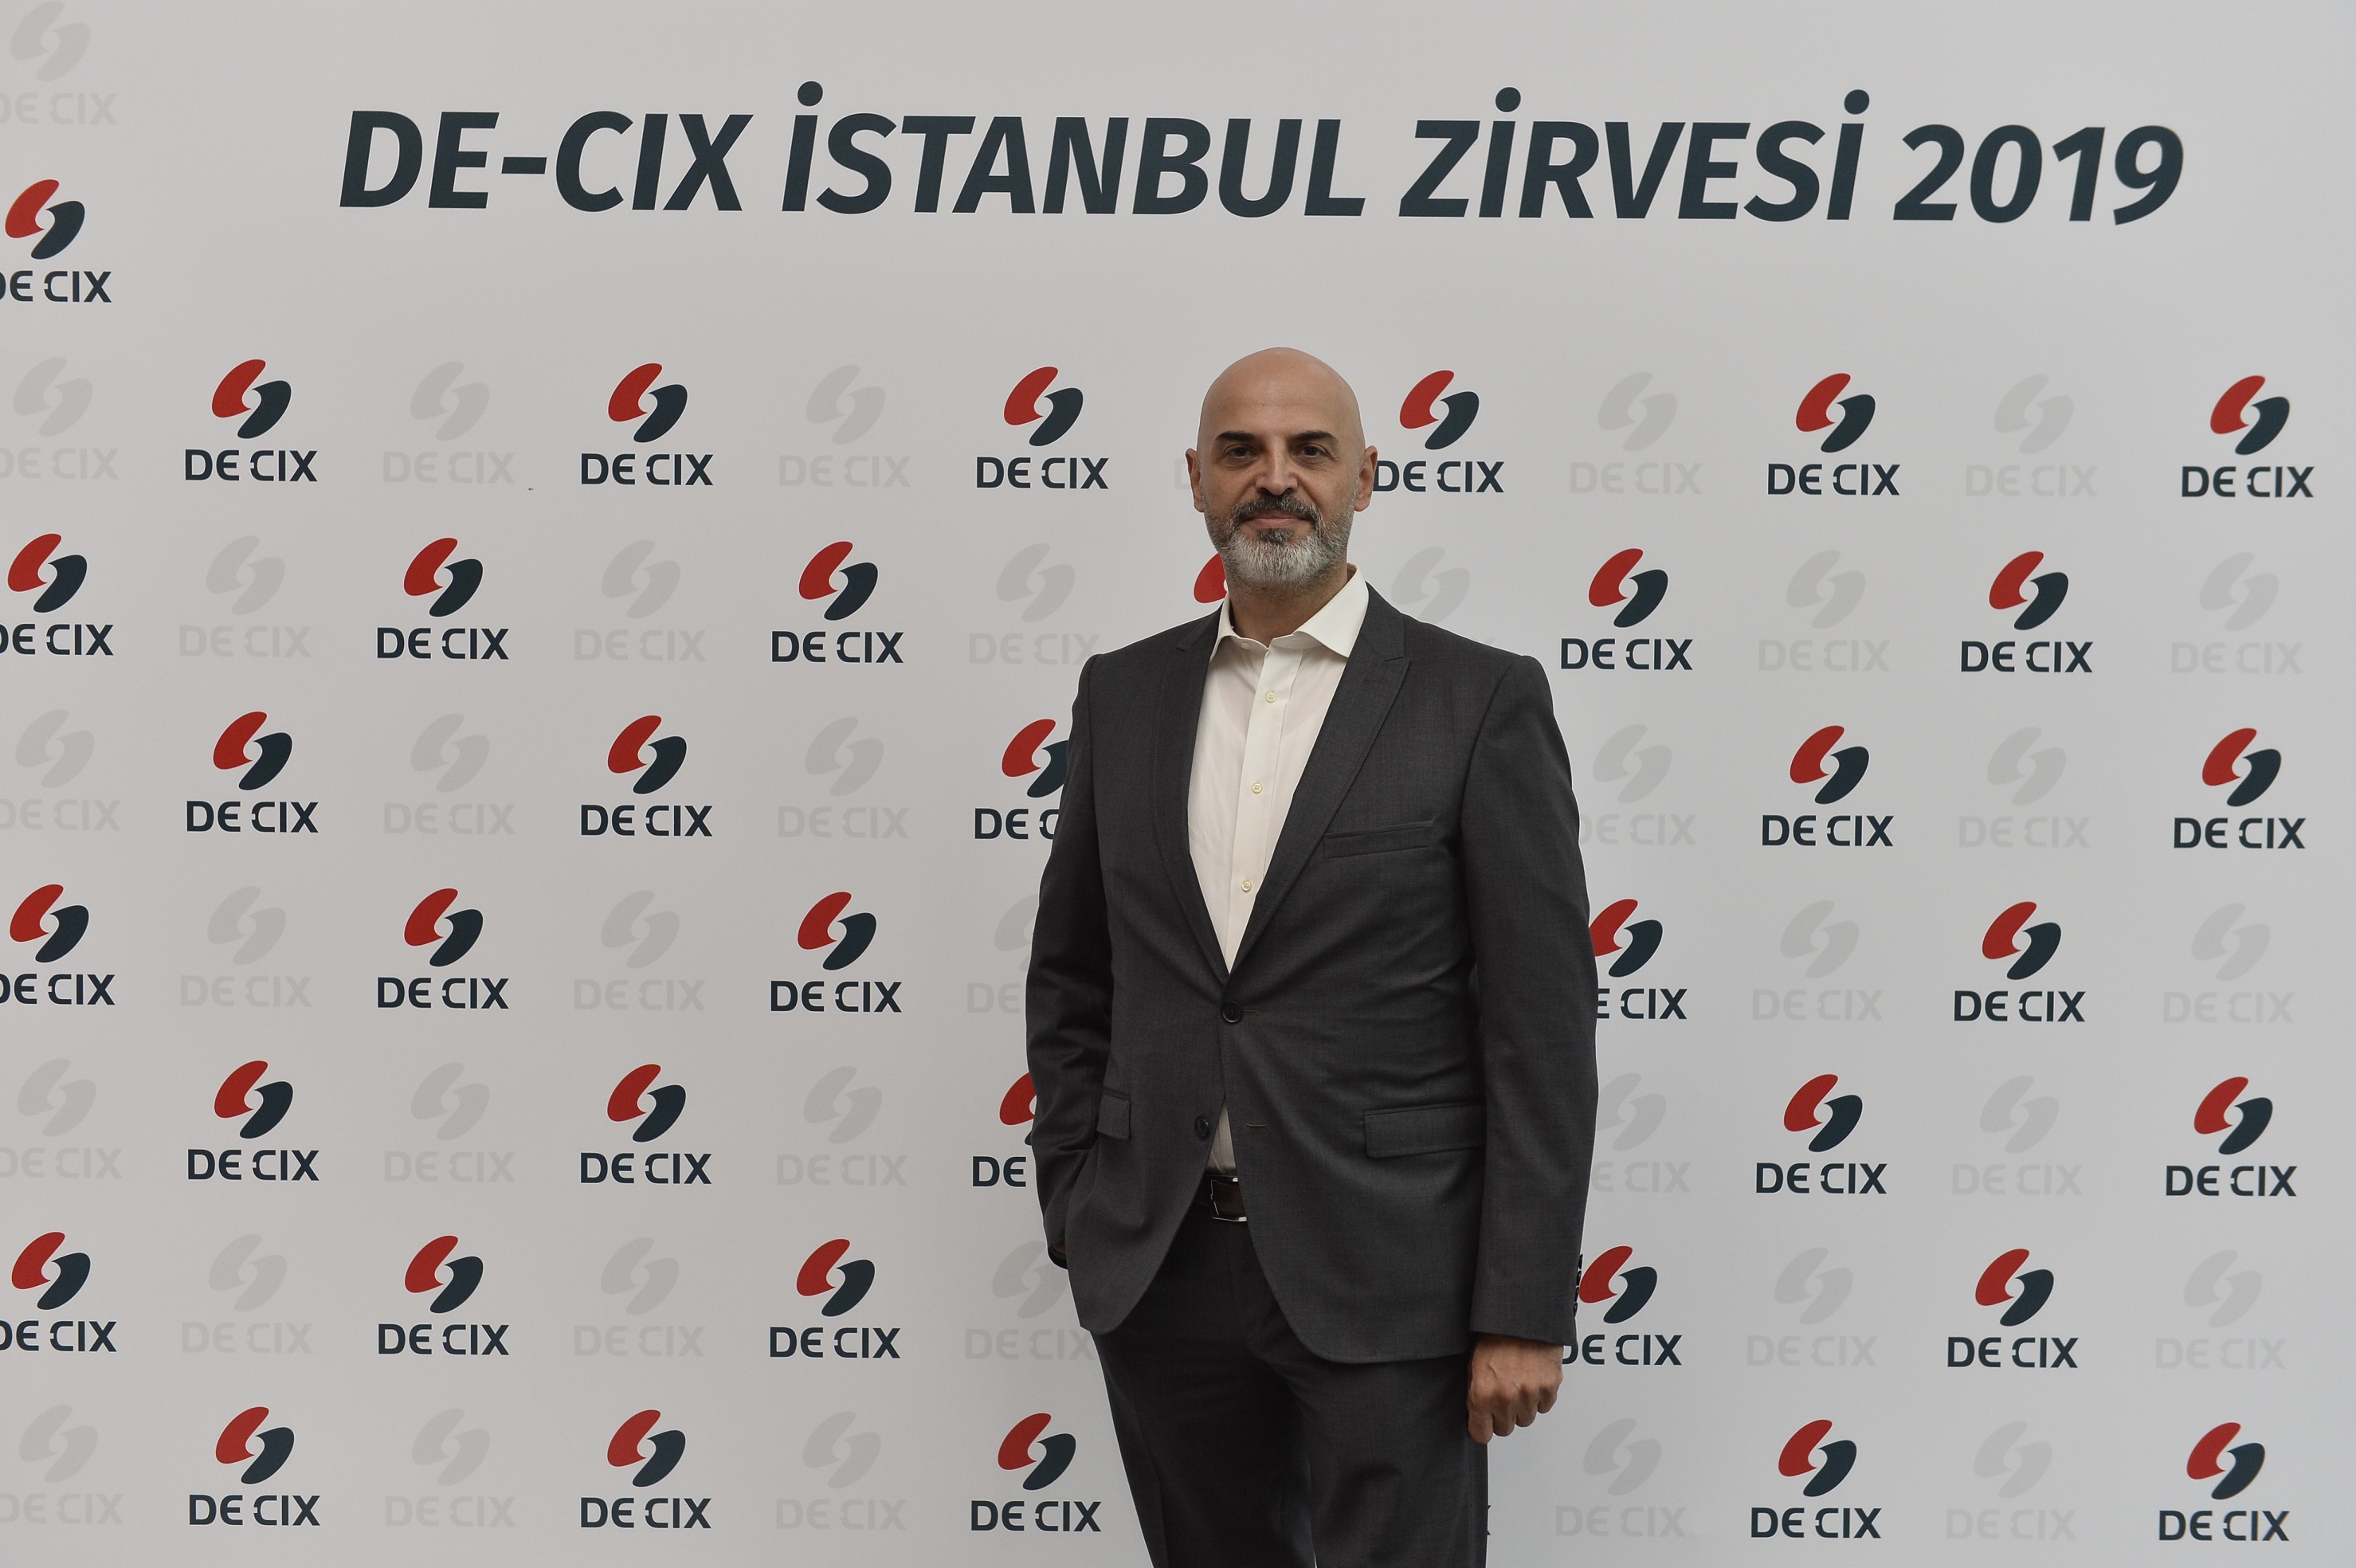 DE-CIX İstanbul Zirvesi 2019